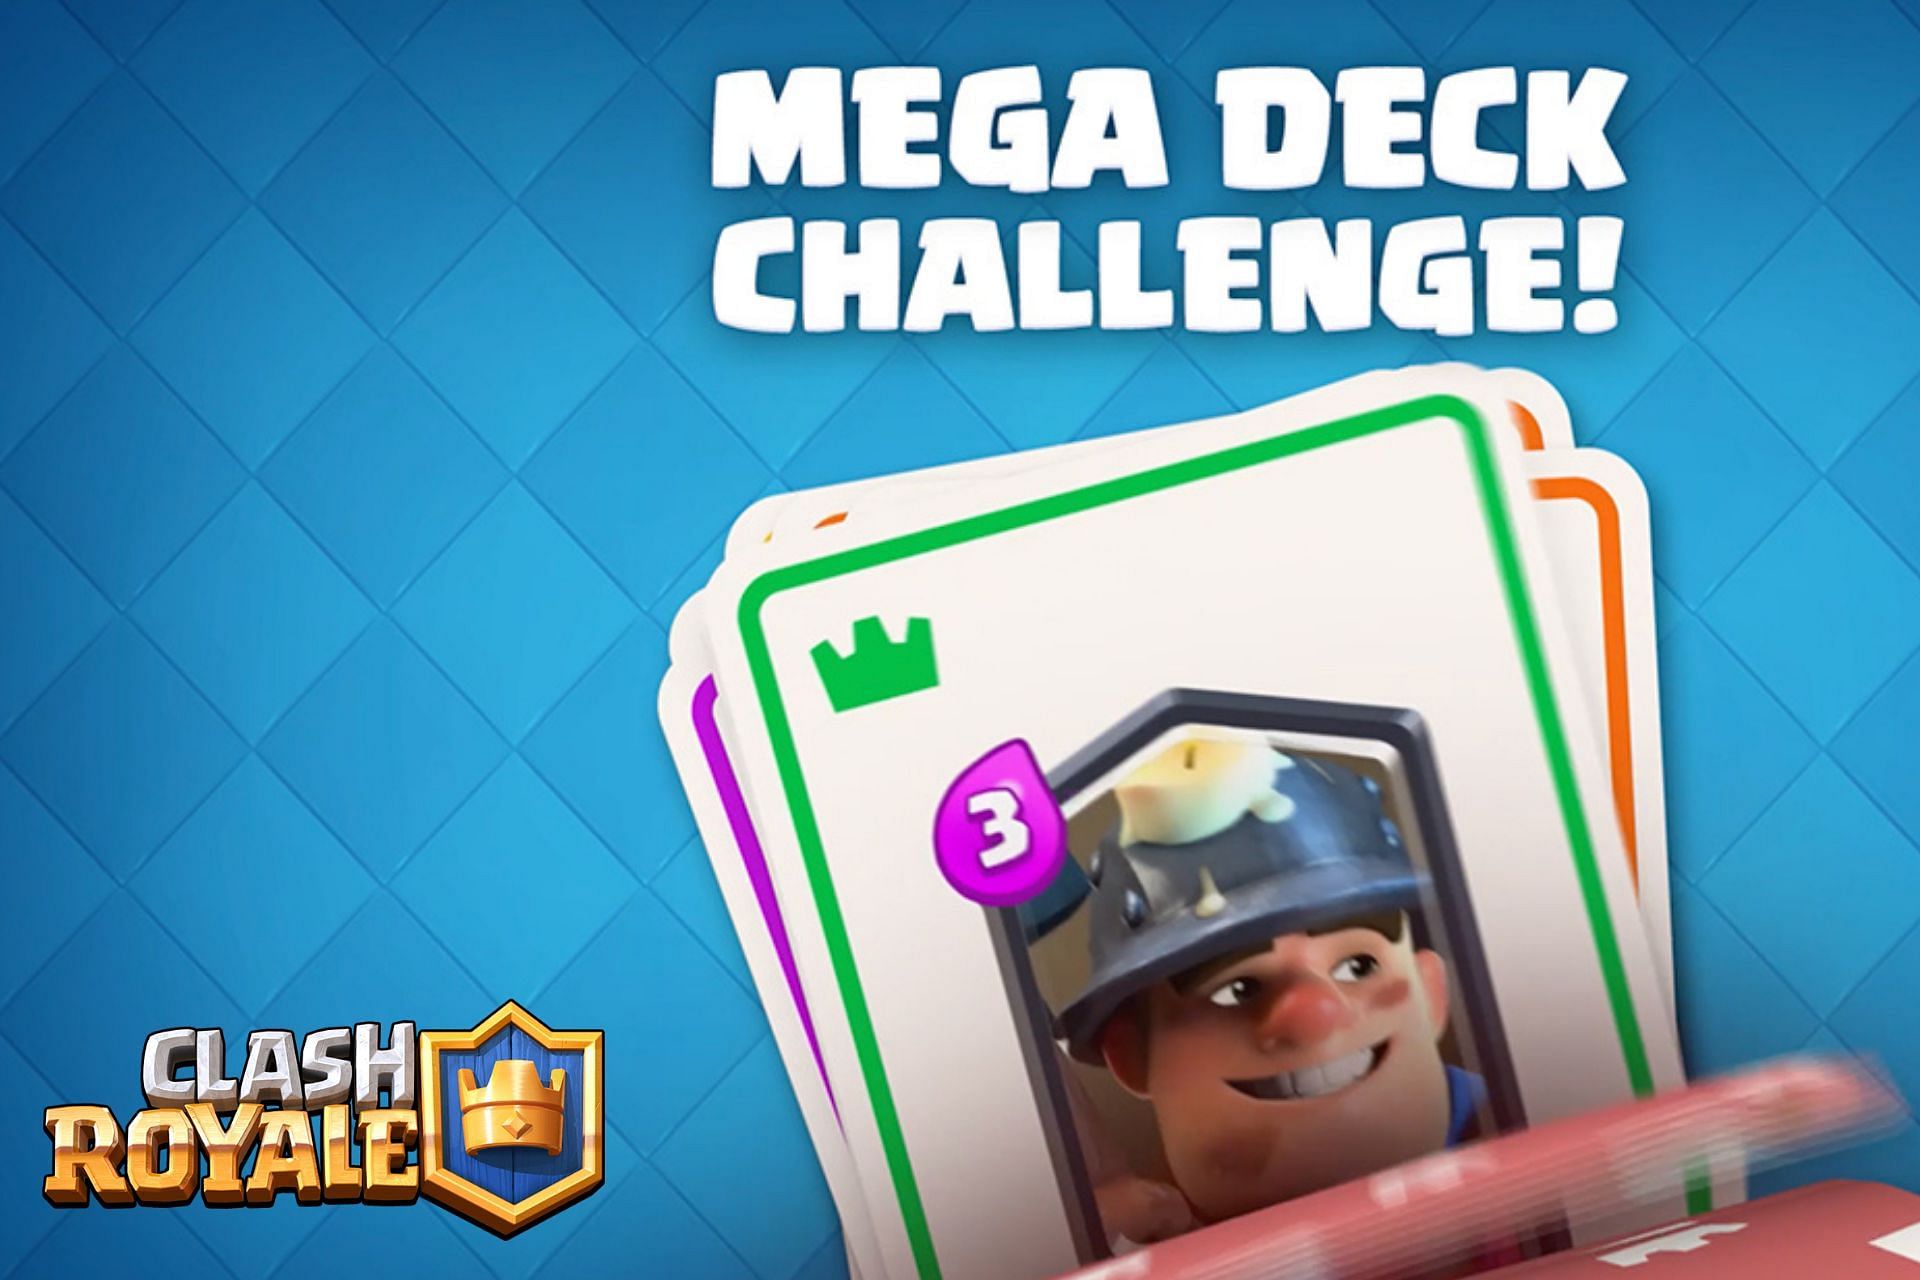 Mega Deck Challenge in Clash Royale (Image via Sportskeeda)